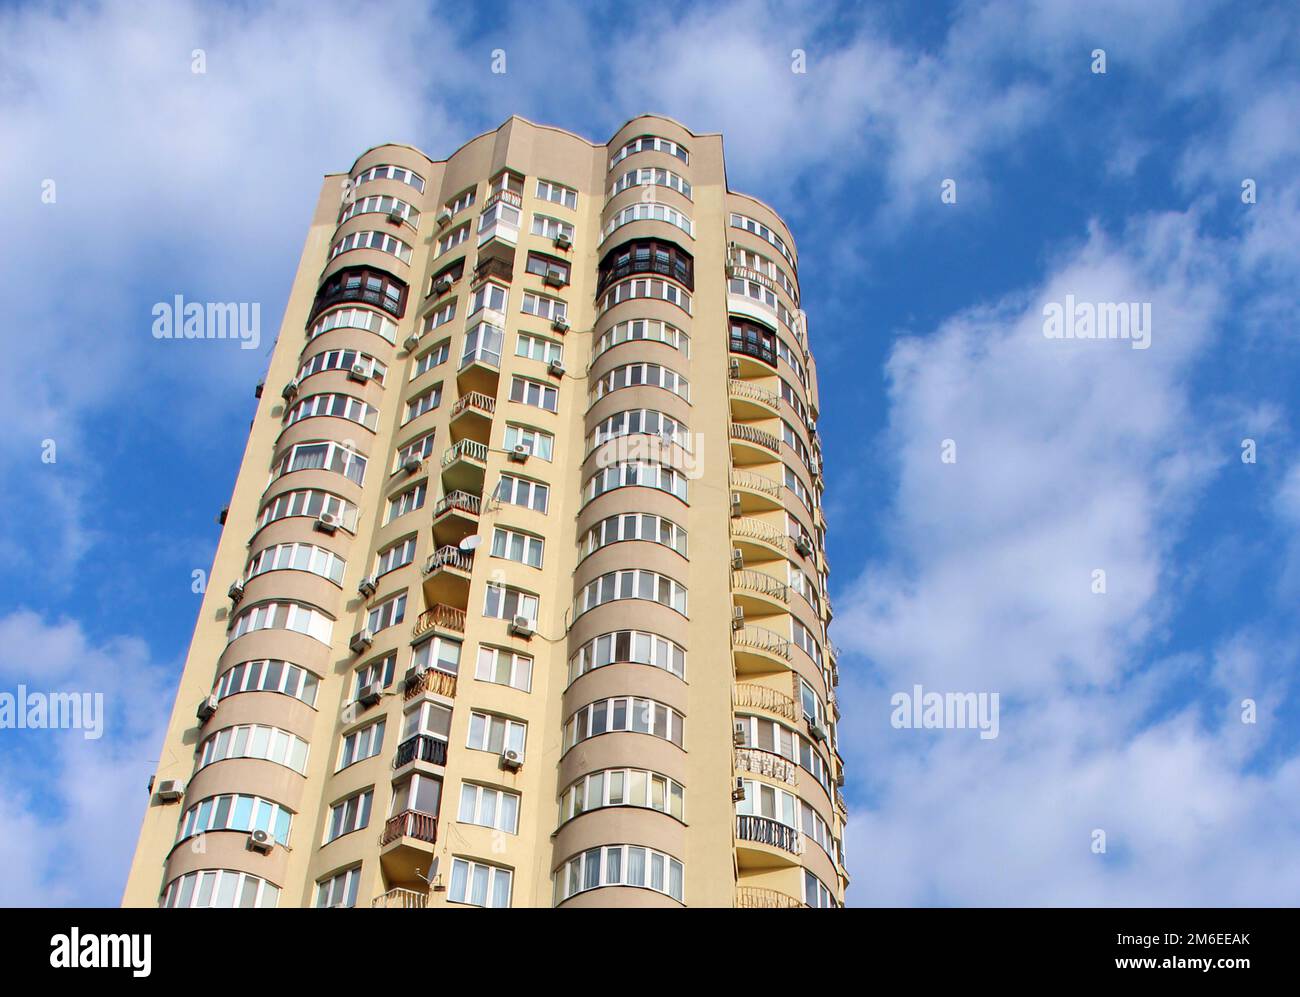 Urban architecture. City life. stylish living block of flats. Real estate Stock Photo